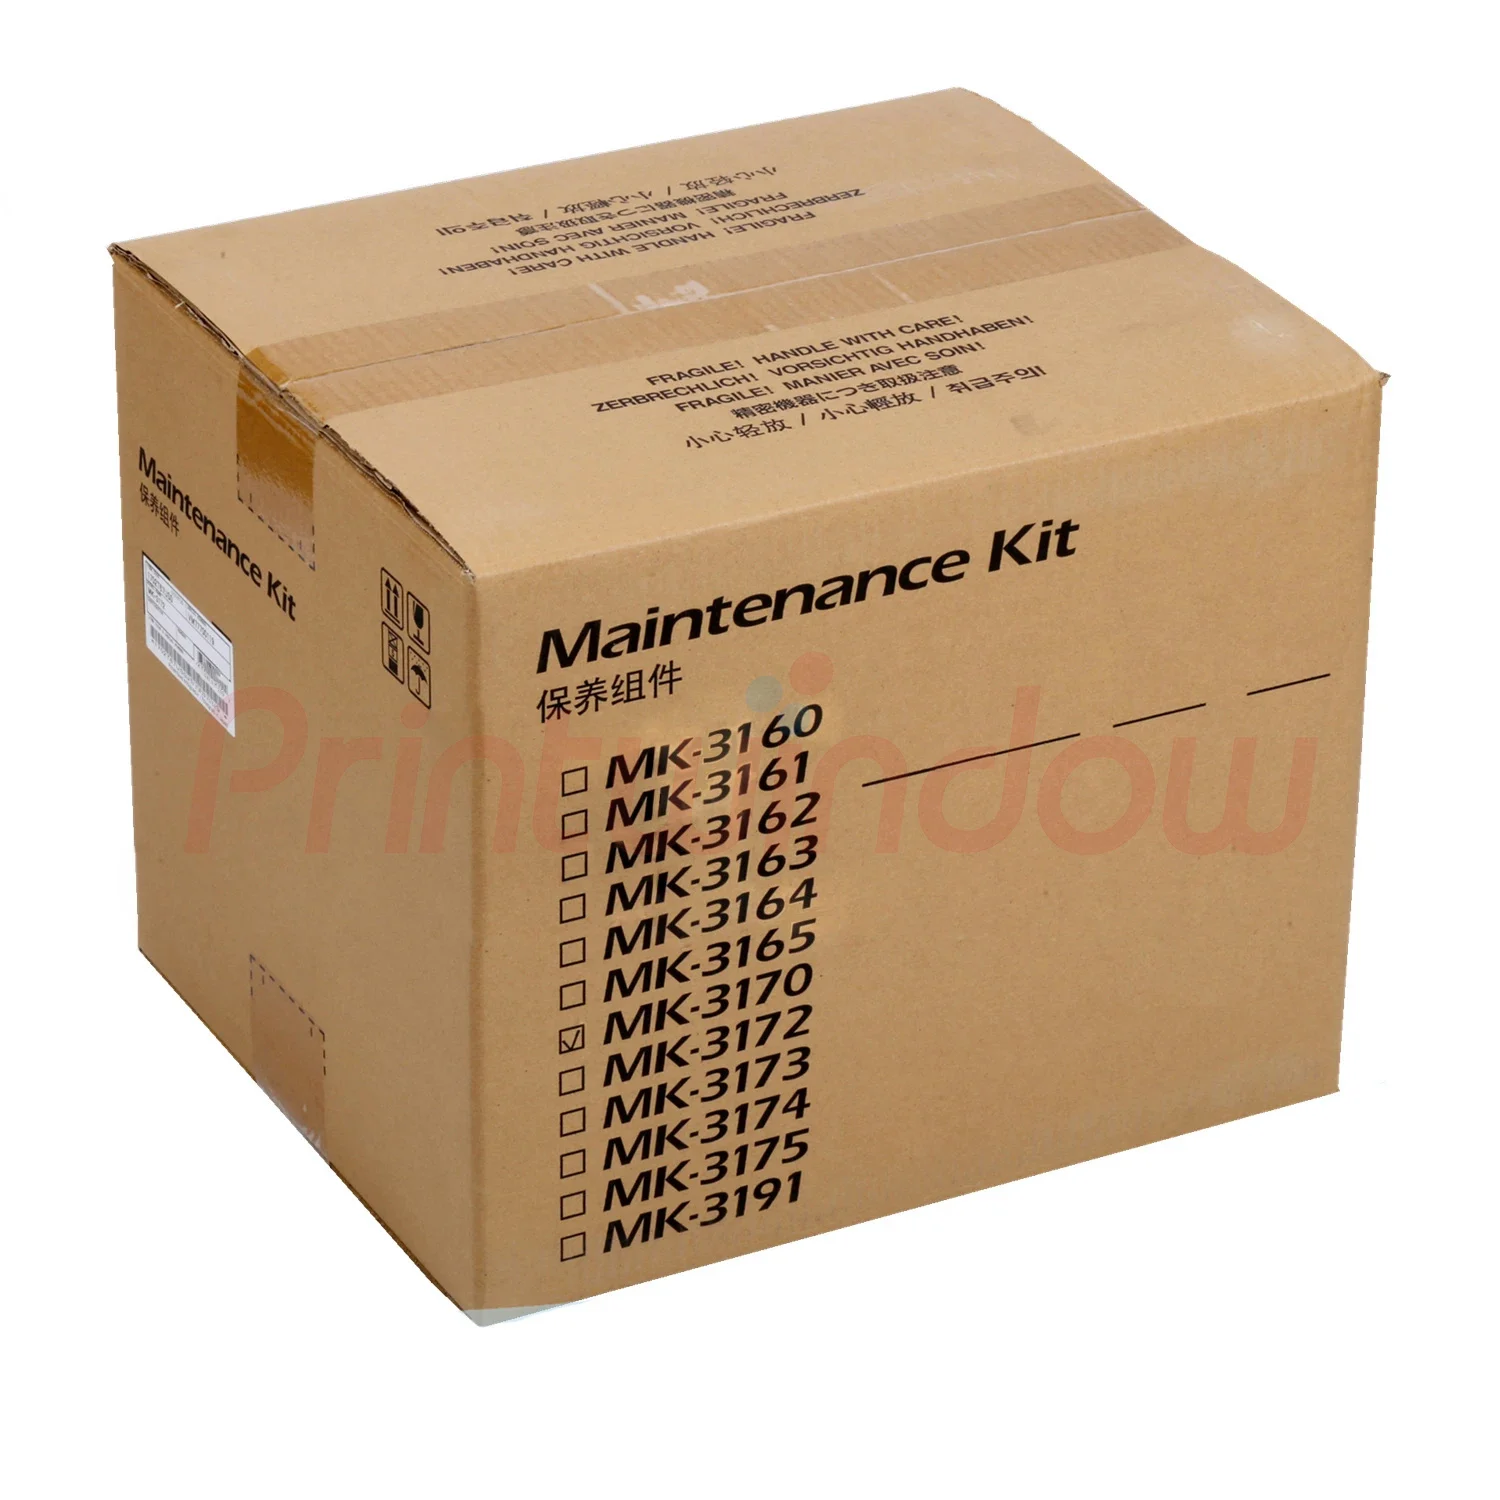 

MK-3170 Maintenance KIT for Kyocera ECOSYS P3050DN P3055DN P3060D MK3170